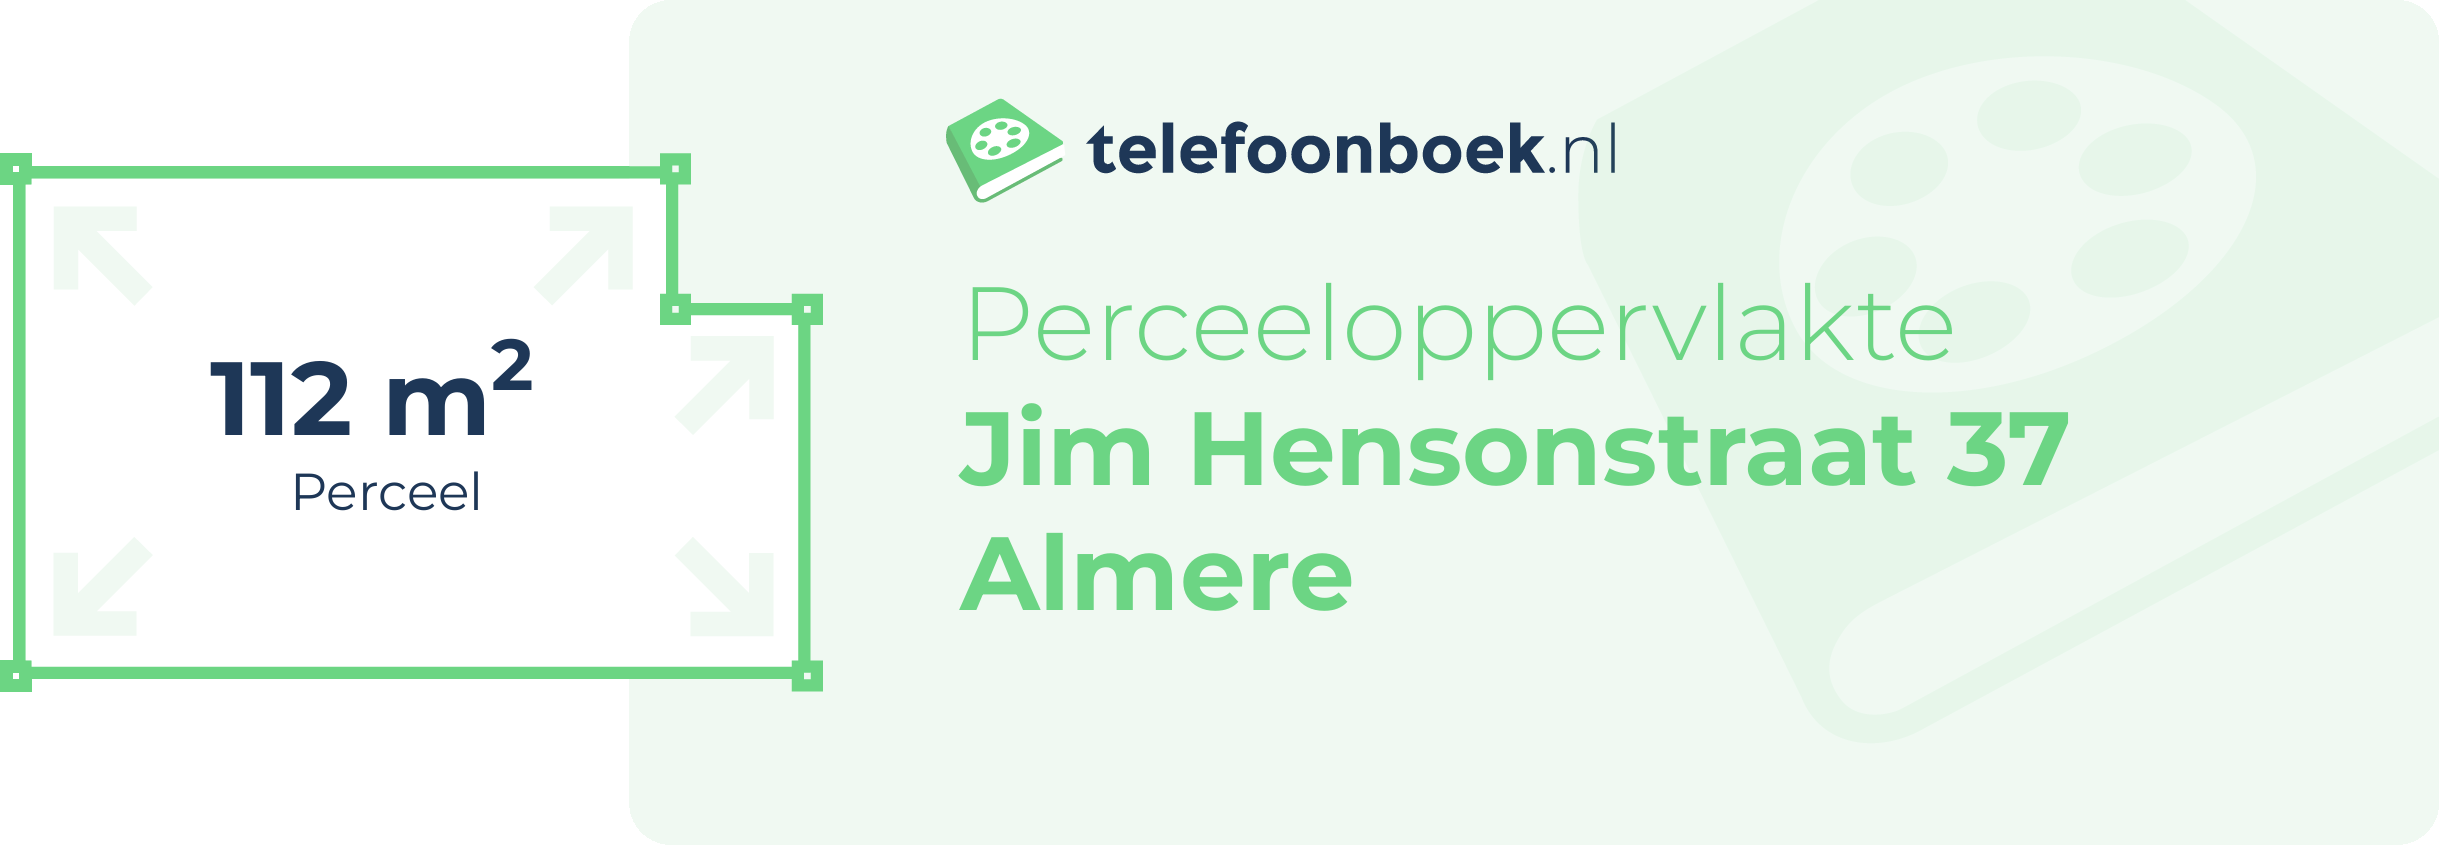 Perceeloppervlakte Jim Hensonstraat 37 Almere